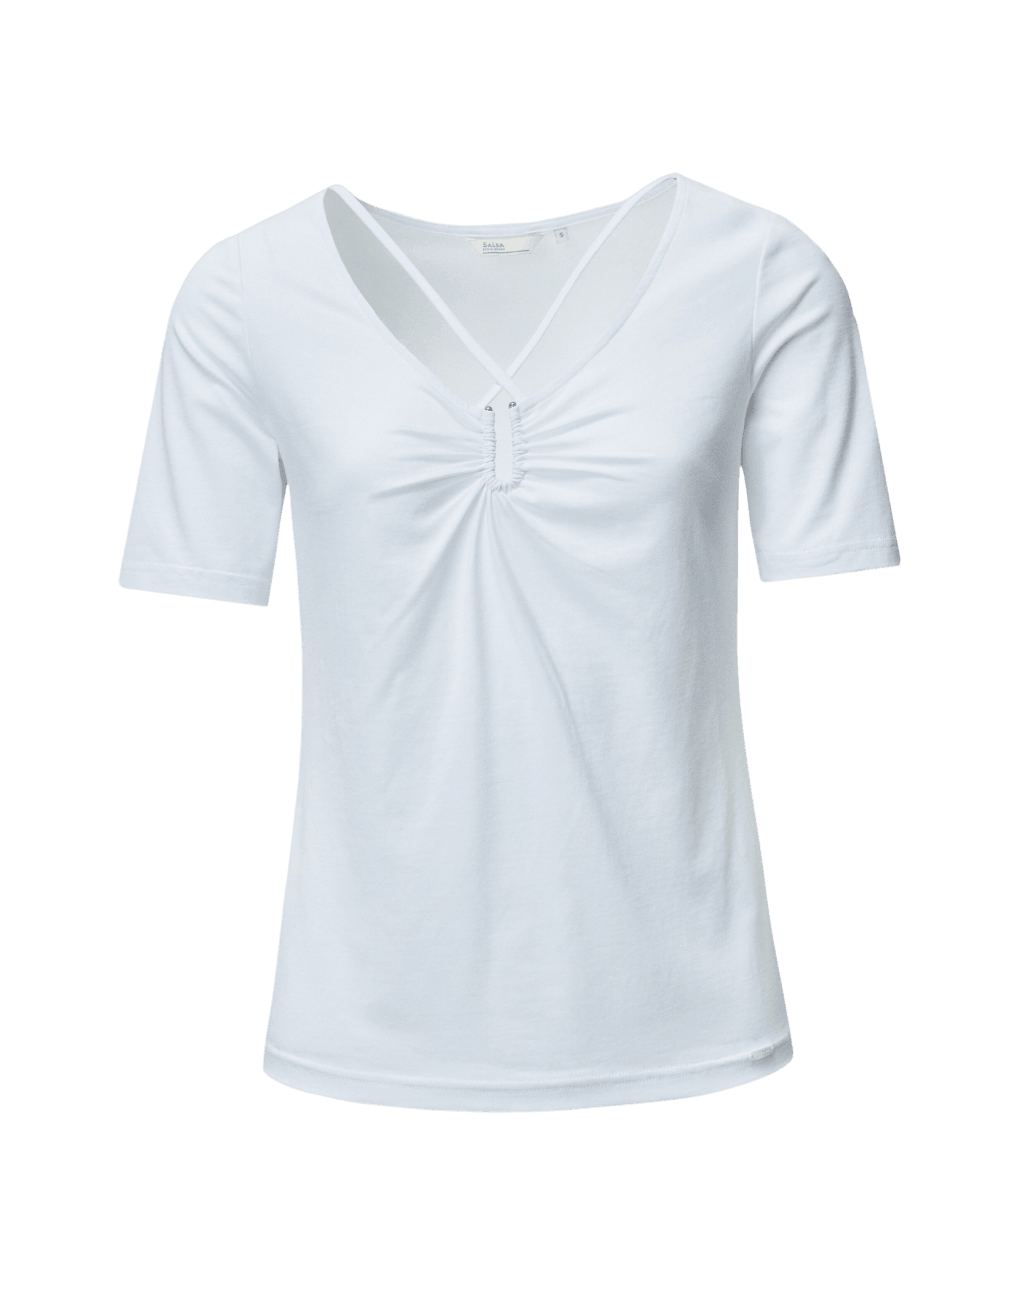 Camiseta Salsa Jeans de Mujer con Escote Asimétrico - ECRU